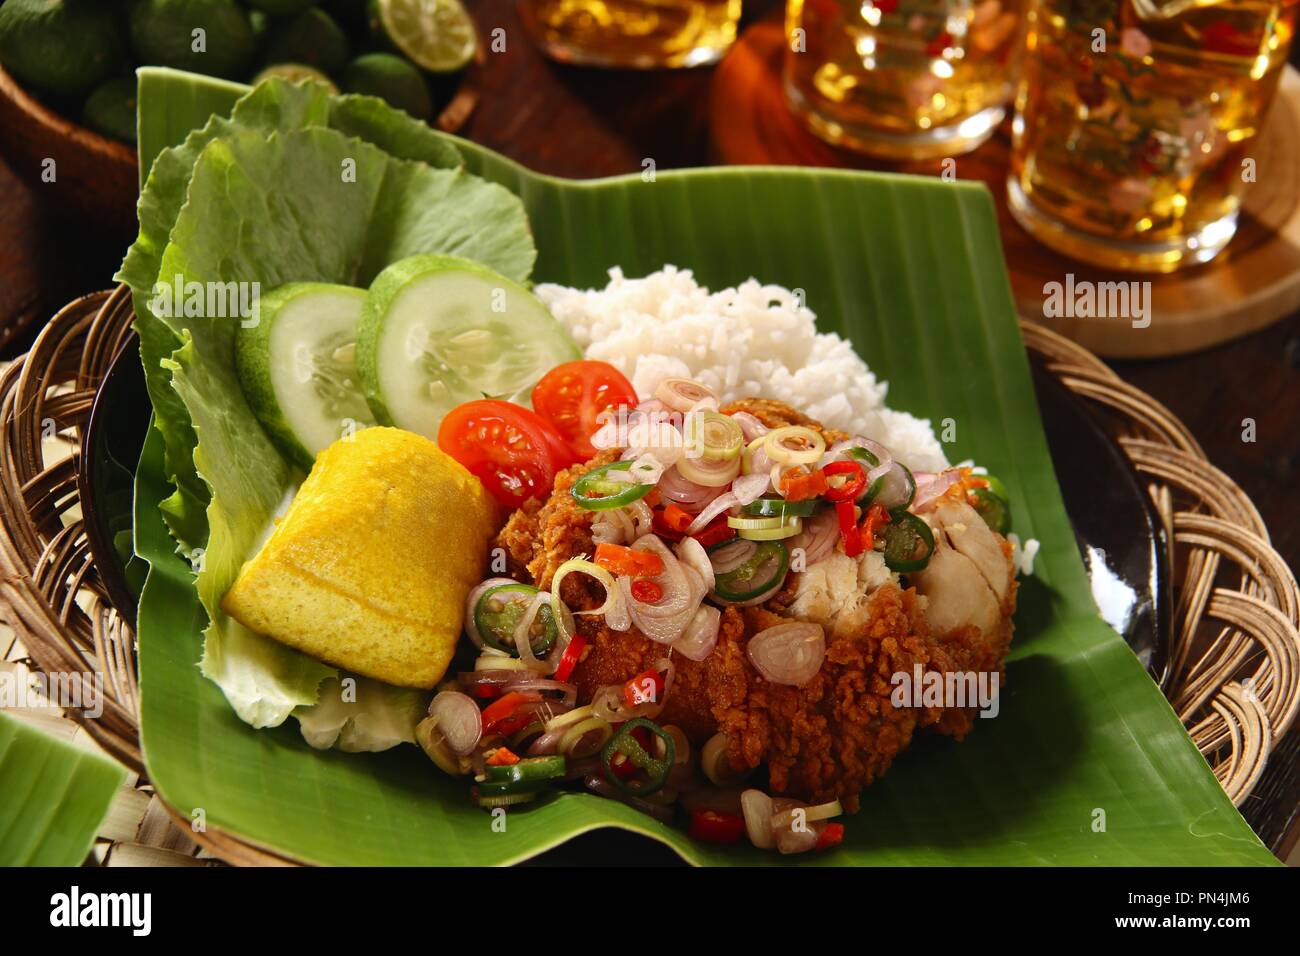 Ayam Geprek Sambal Matah Fusion Street Food Dish Of Southern Fried